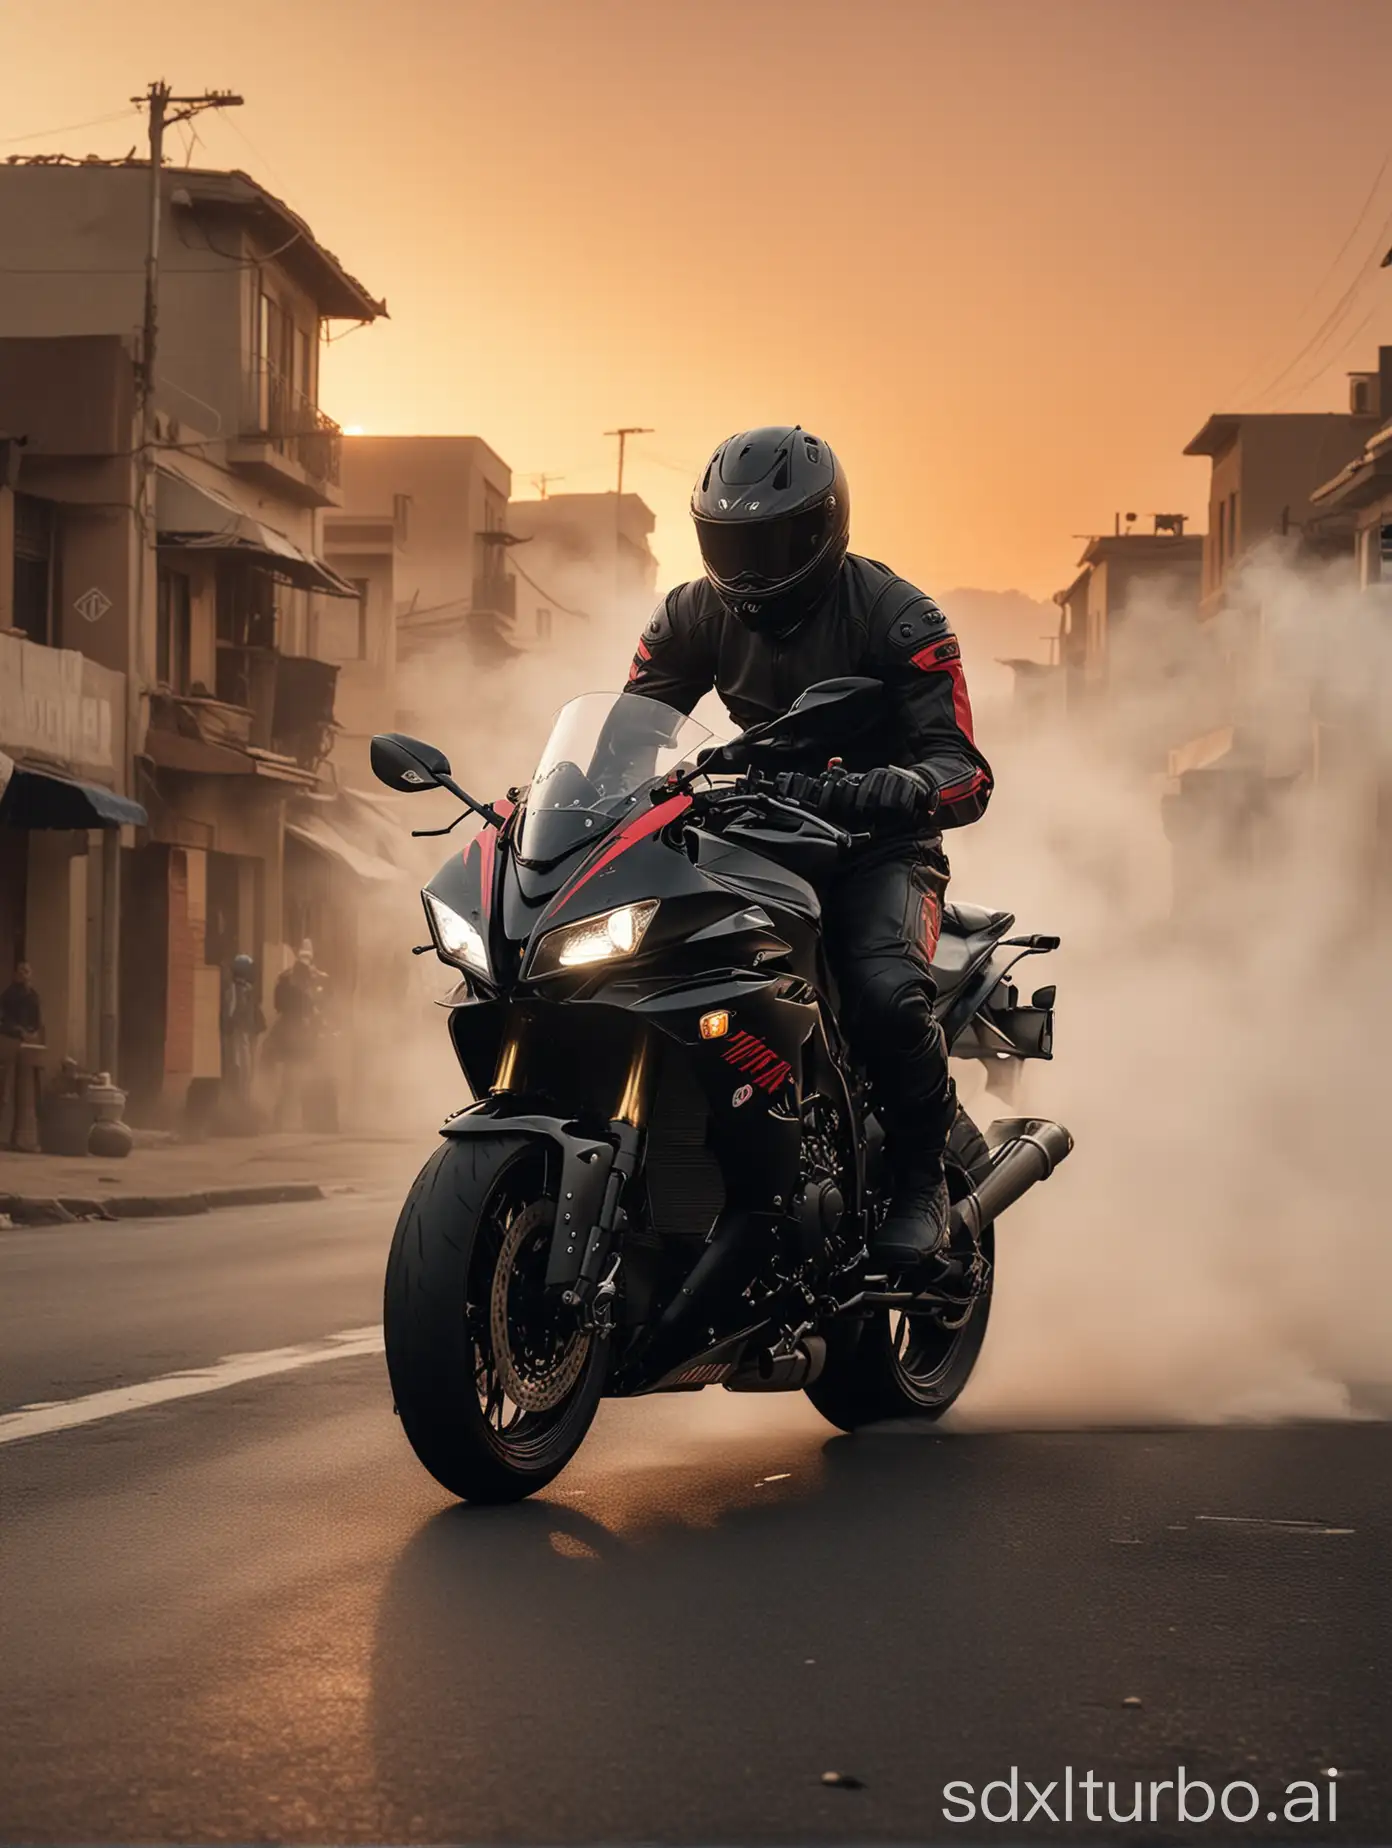 AdrenalineFueled-Sunset-Ride-18YearOld-Expertly-Riding-a-Sleek-Black-Yamaha-R1-Motorcycle